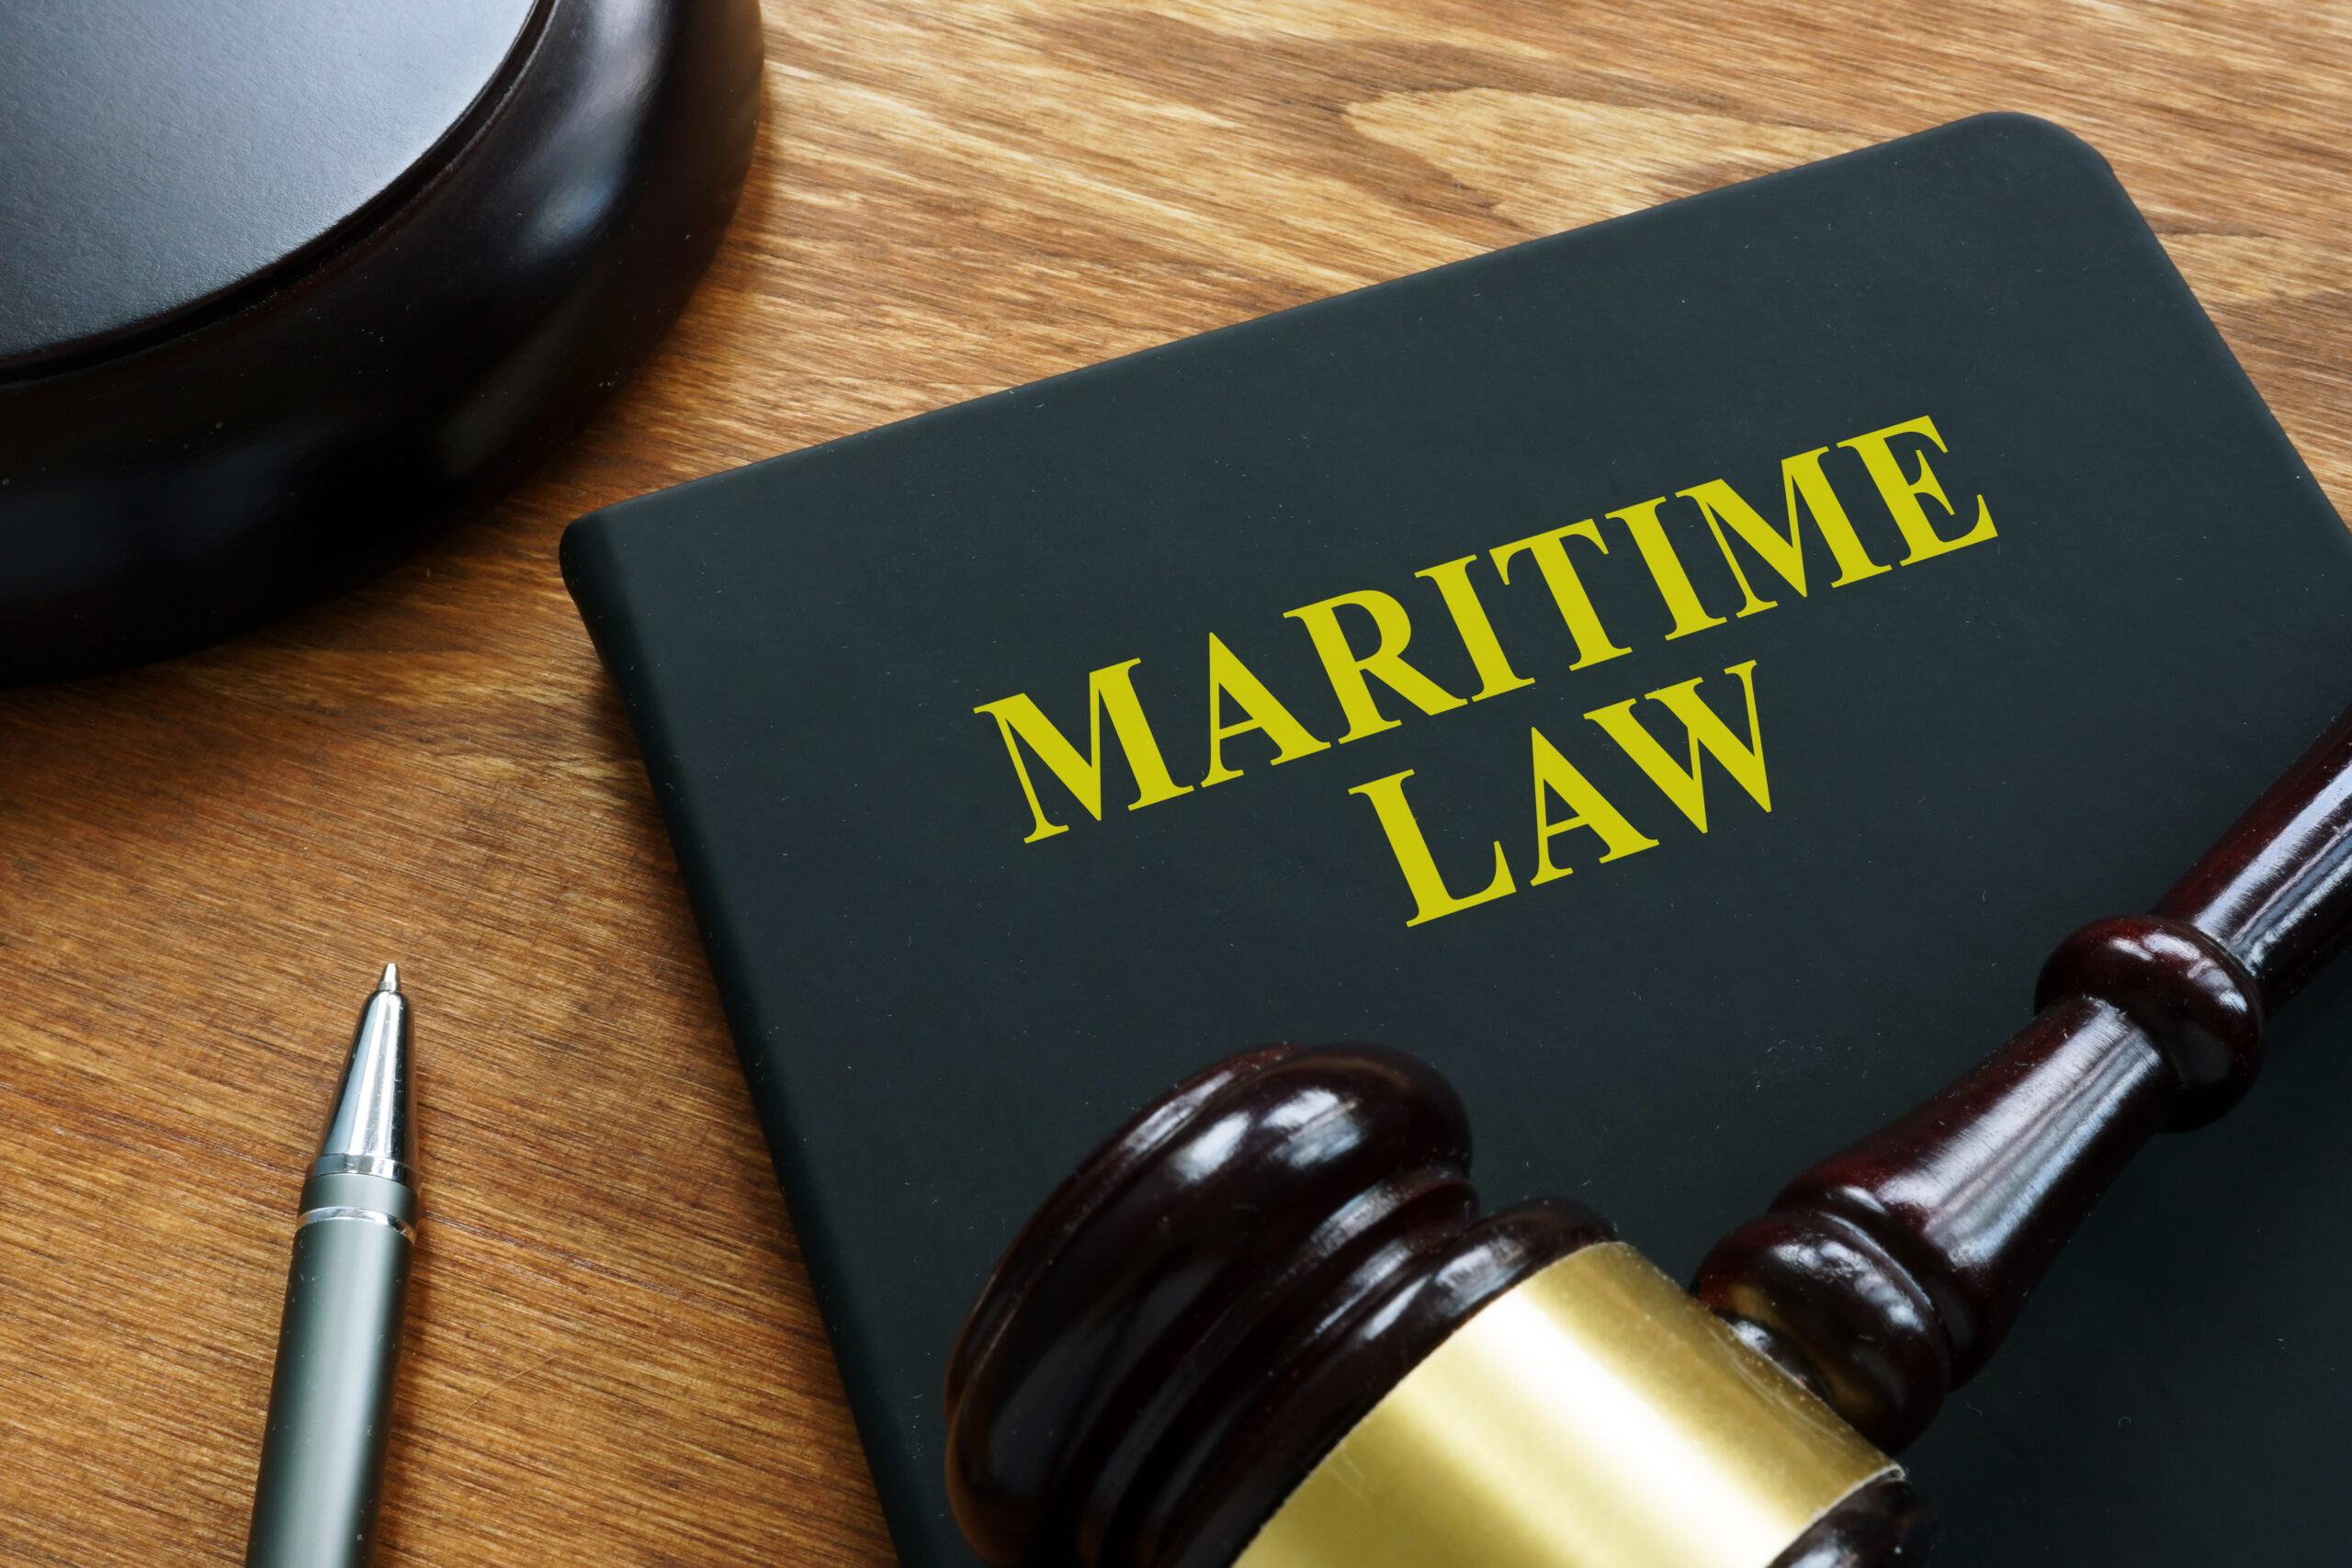 phd on maritime law